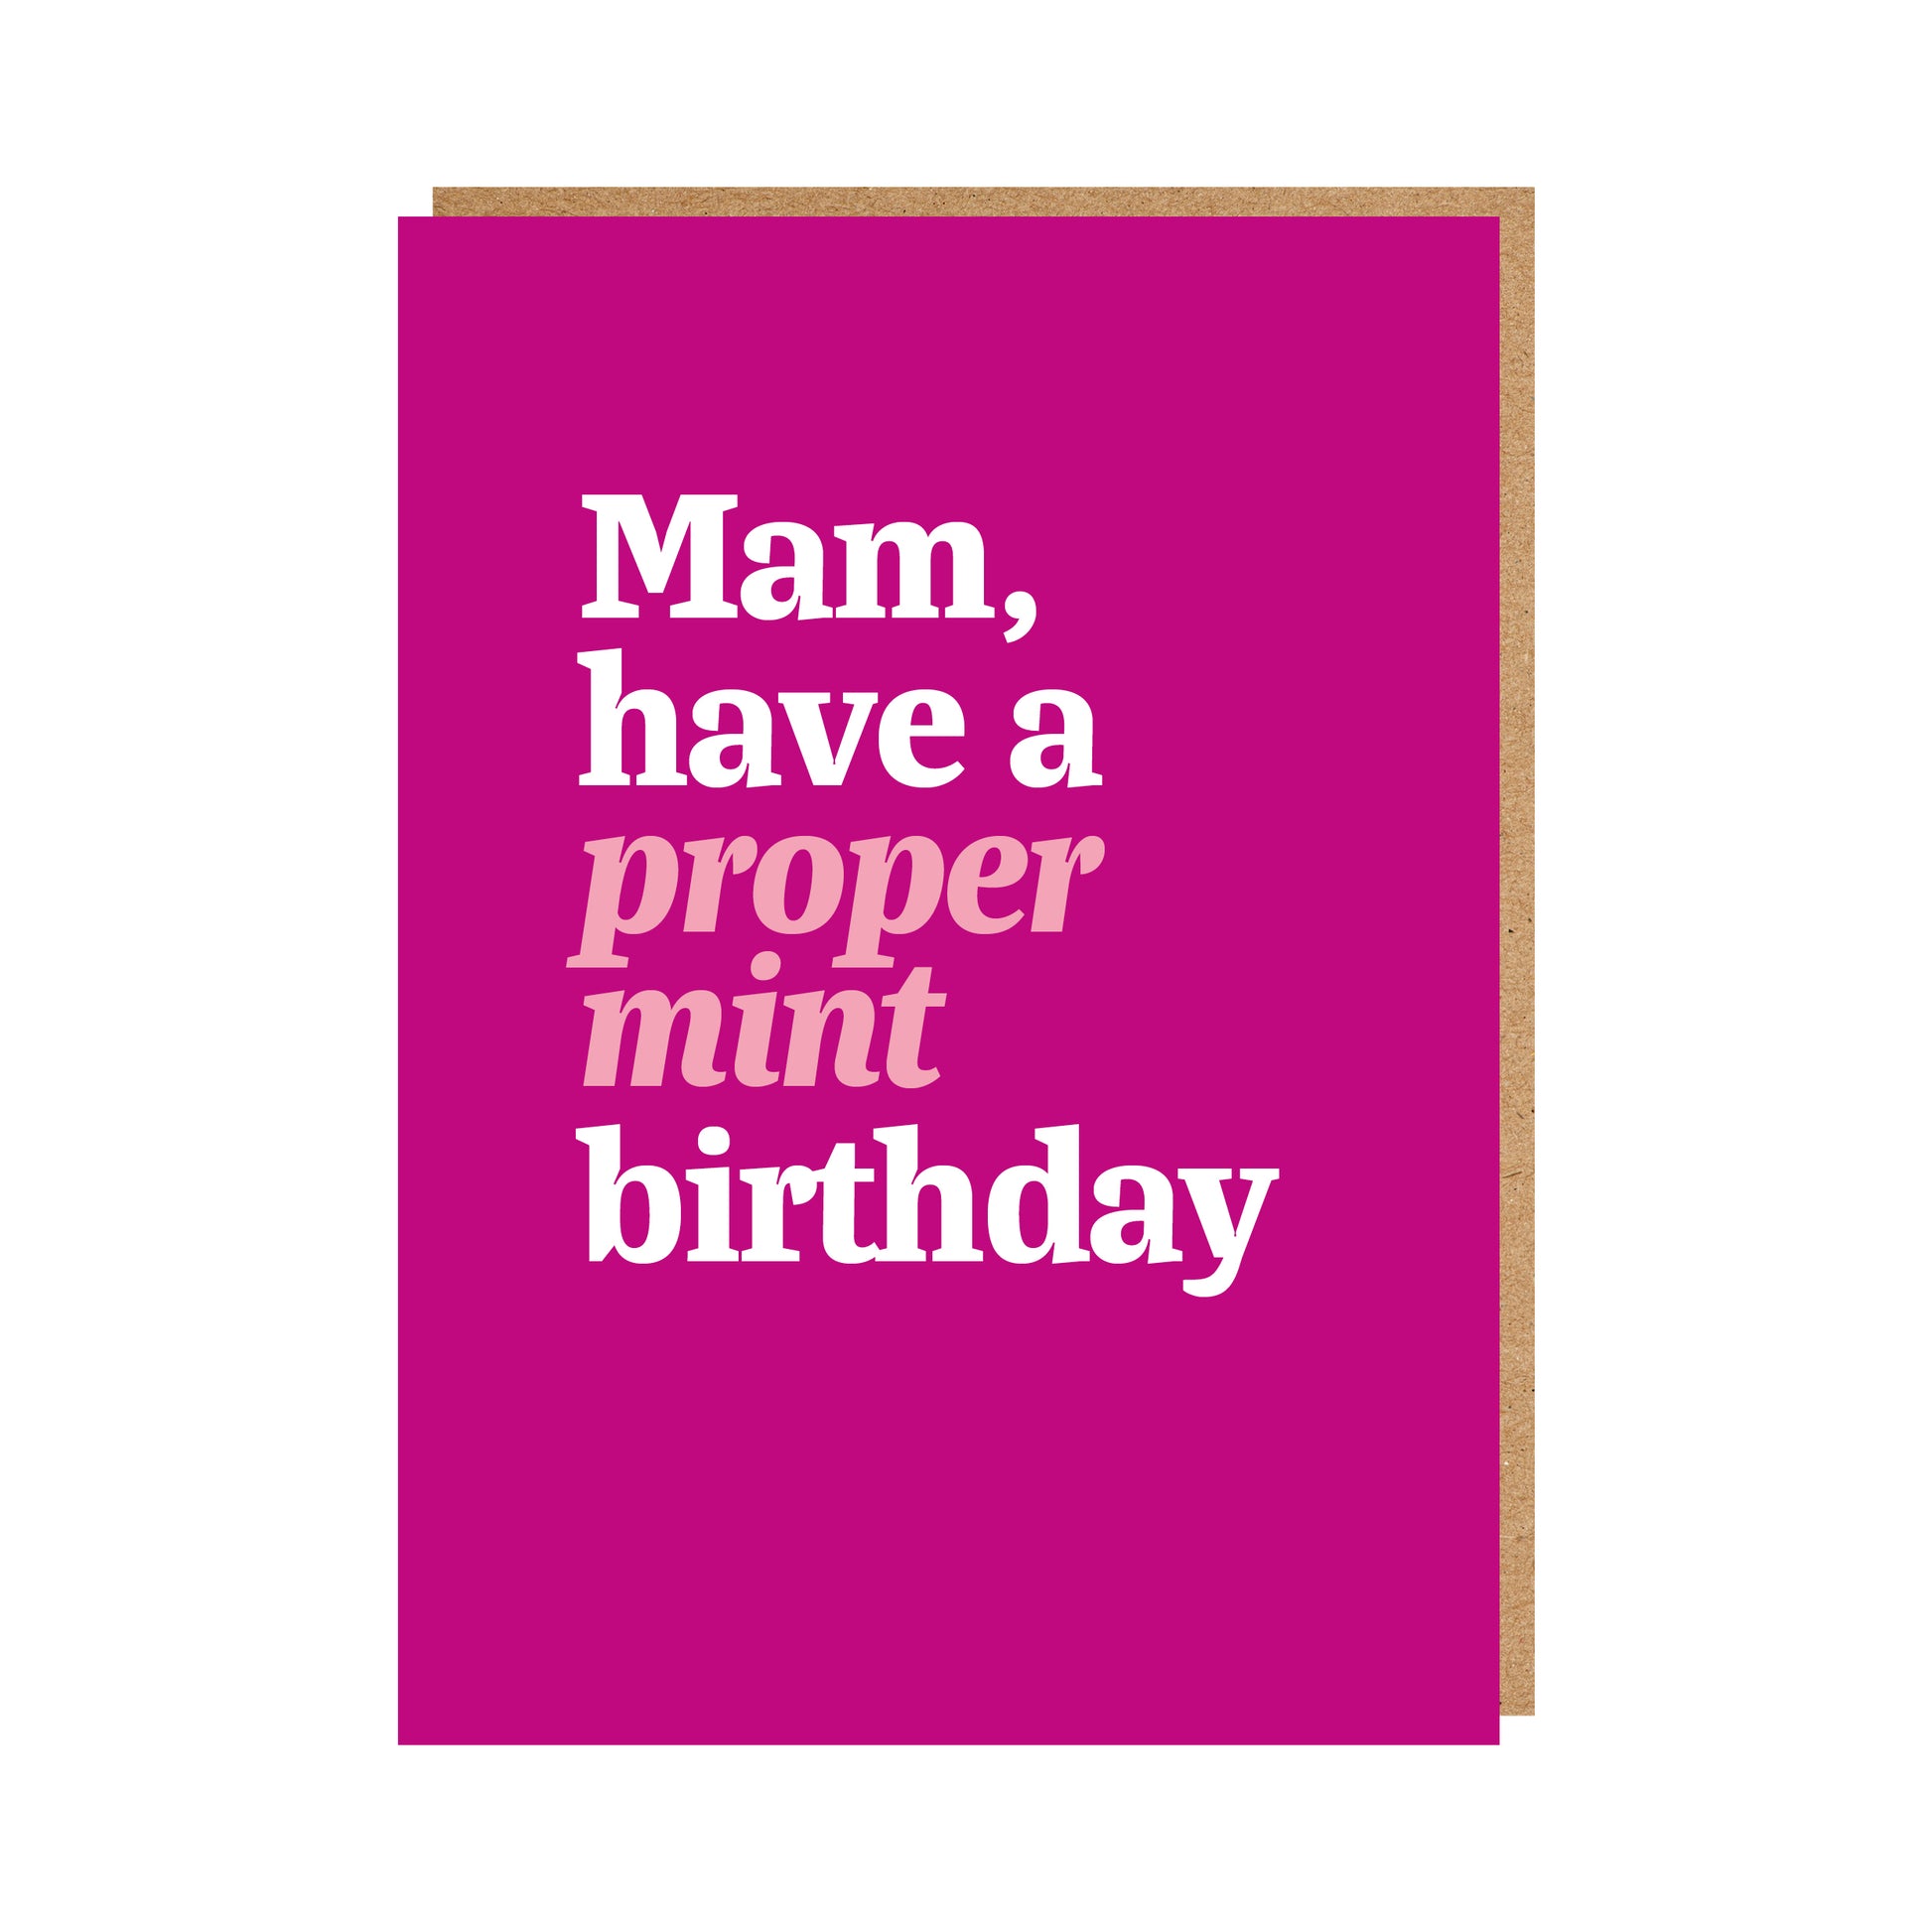 Mam Birthday Card reading "Mam, have a proper mint birthday"